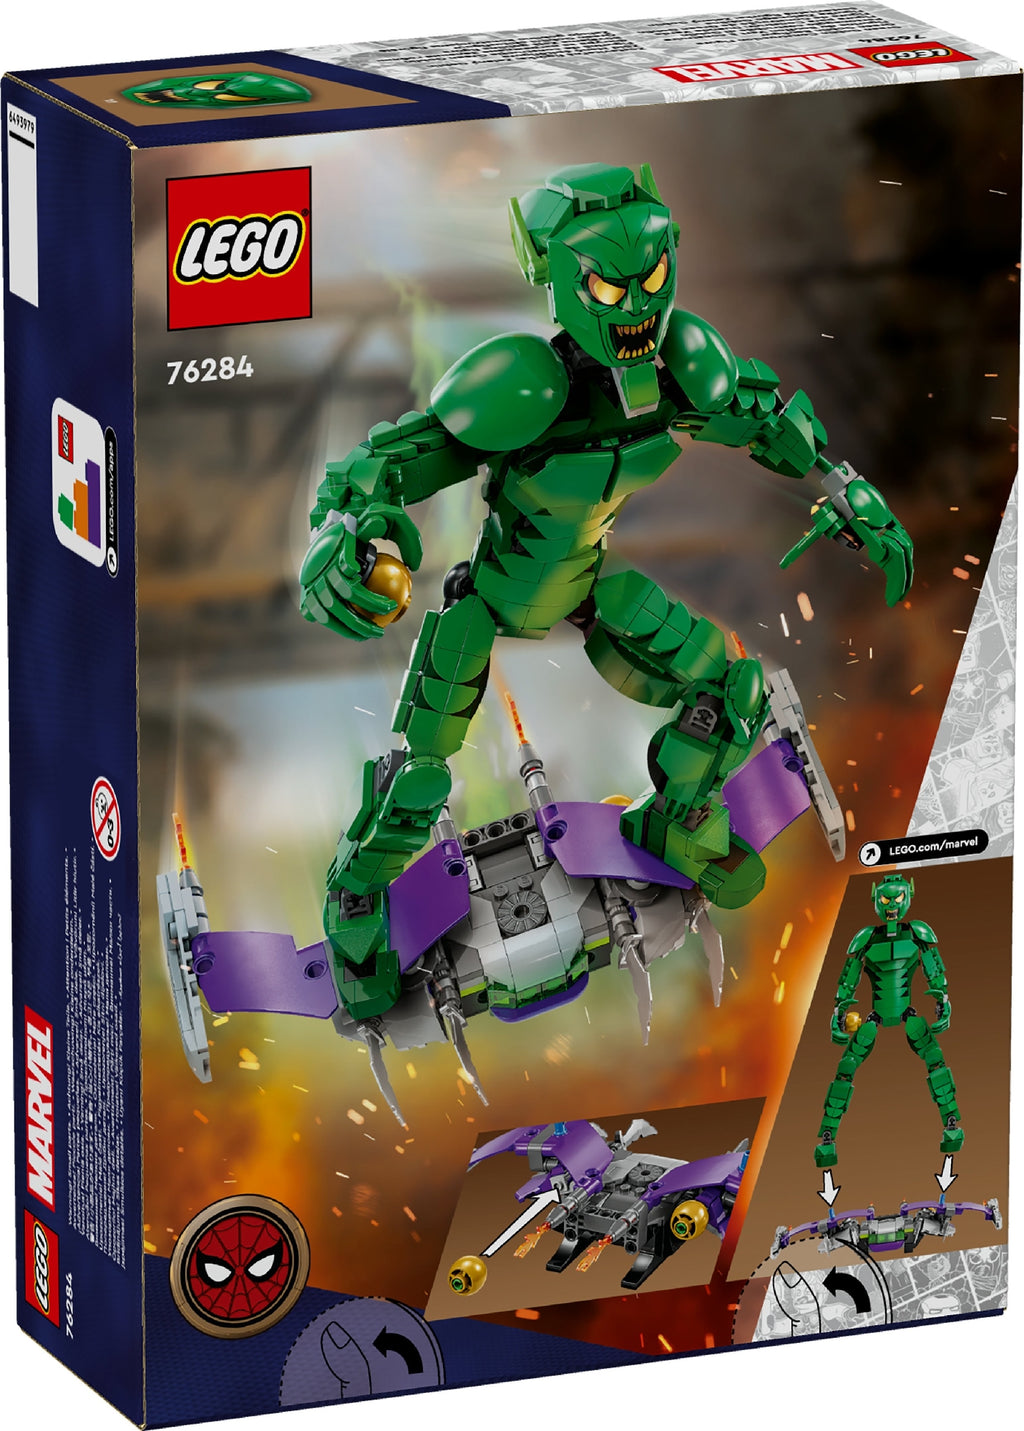 LEGO MARVEL GREEN GOBLIN CONSTRUCTION FIGURE 76284 AGE: 8+